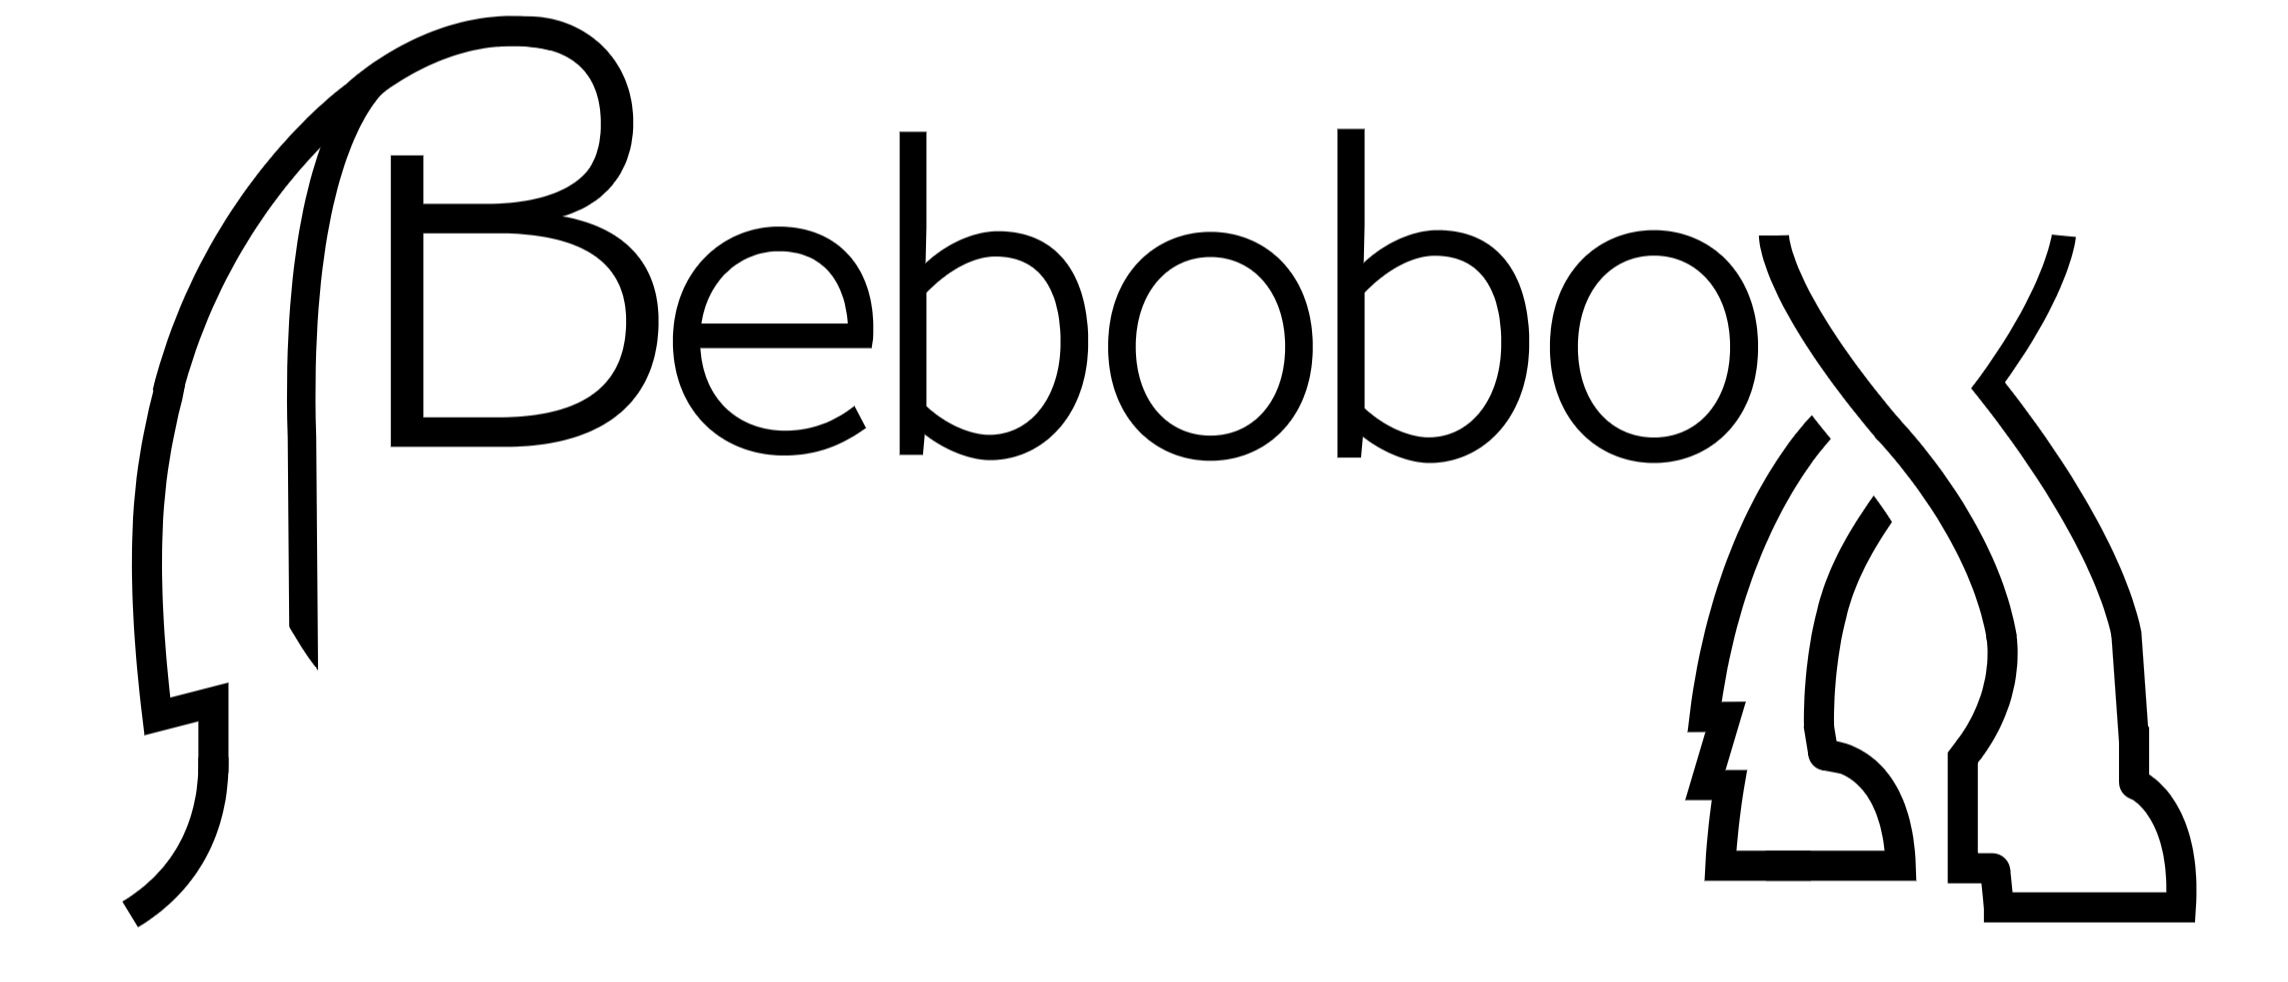 Bebobox